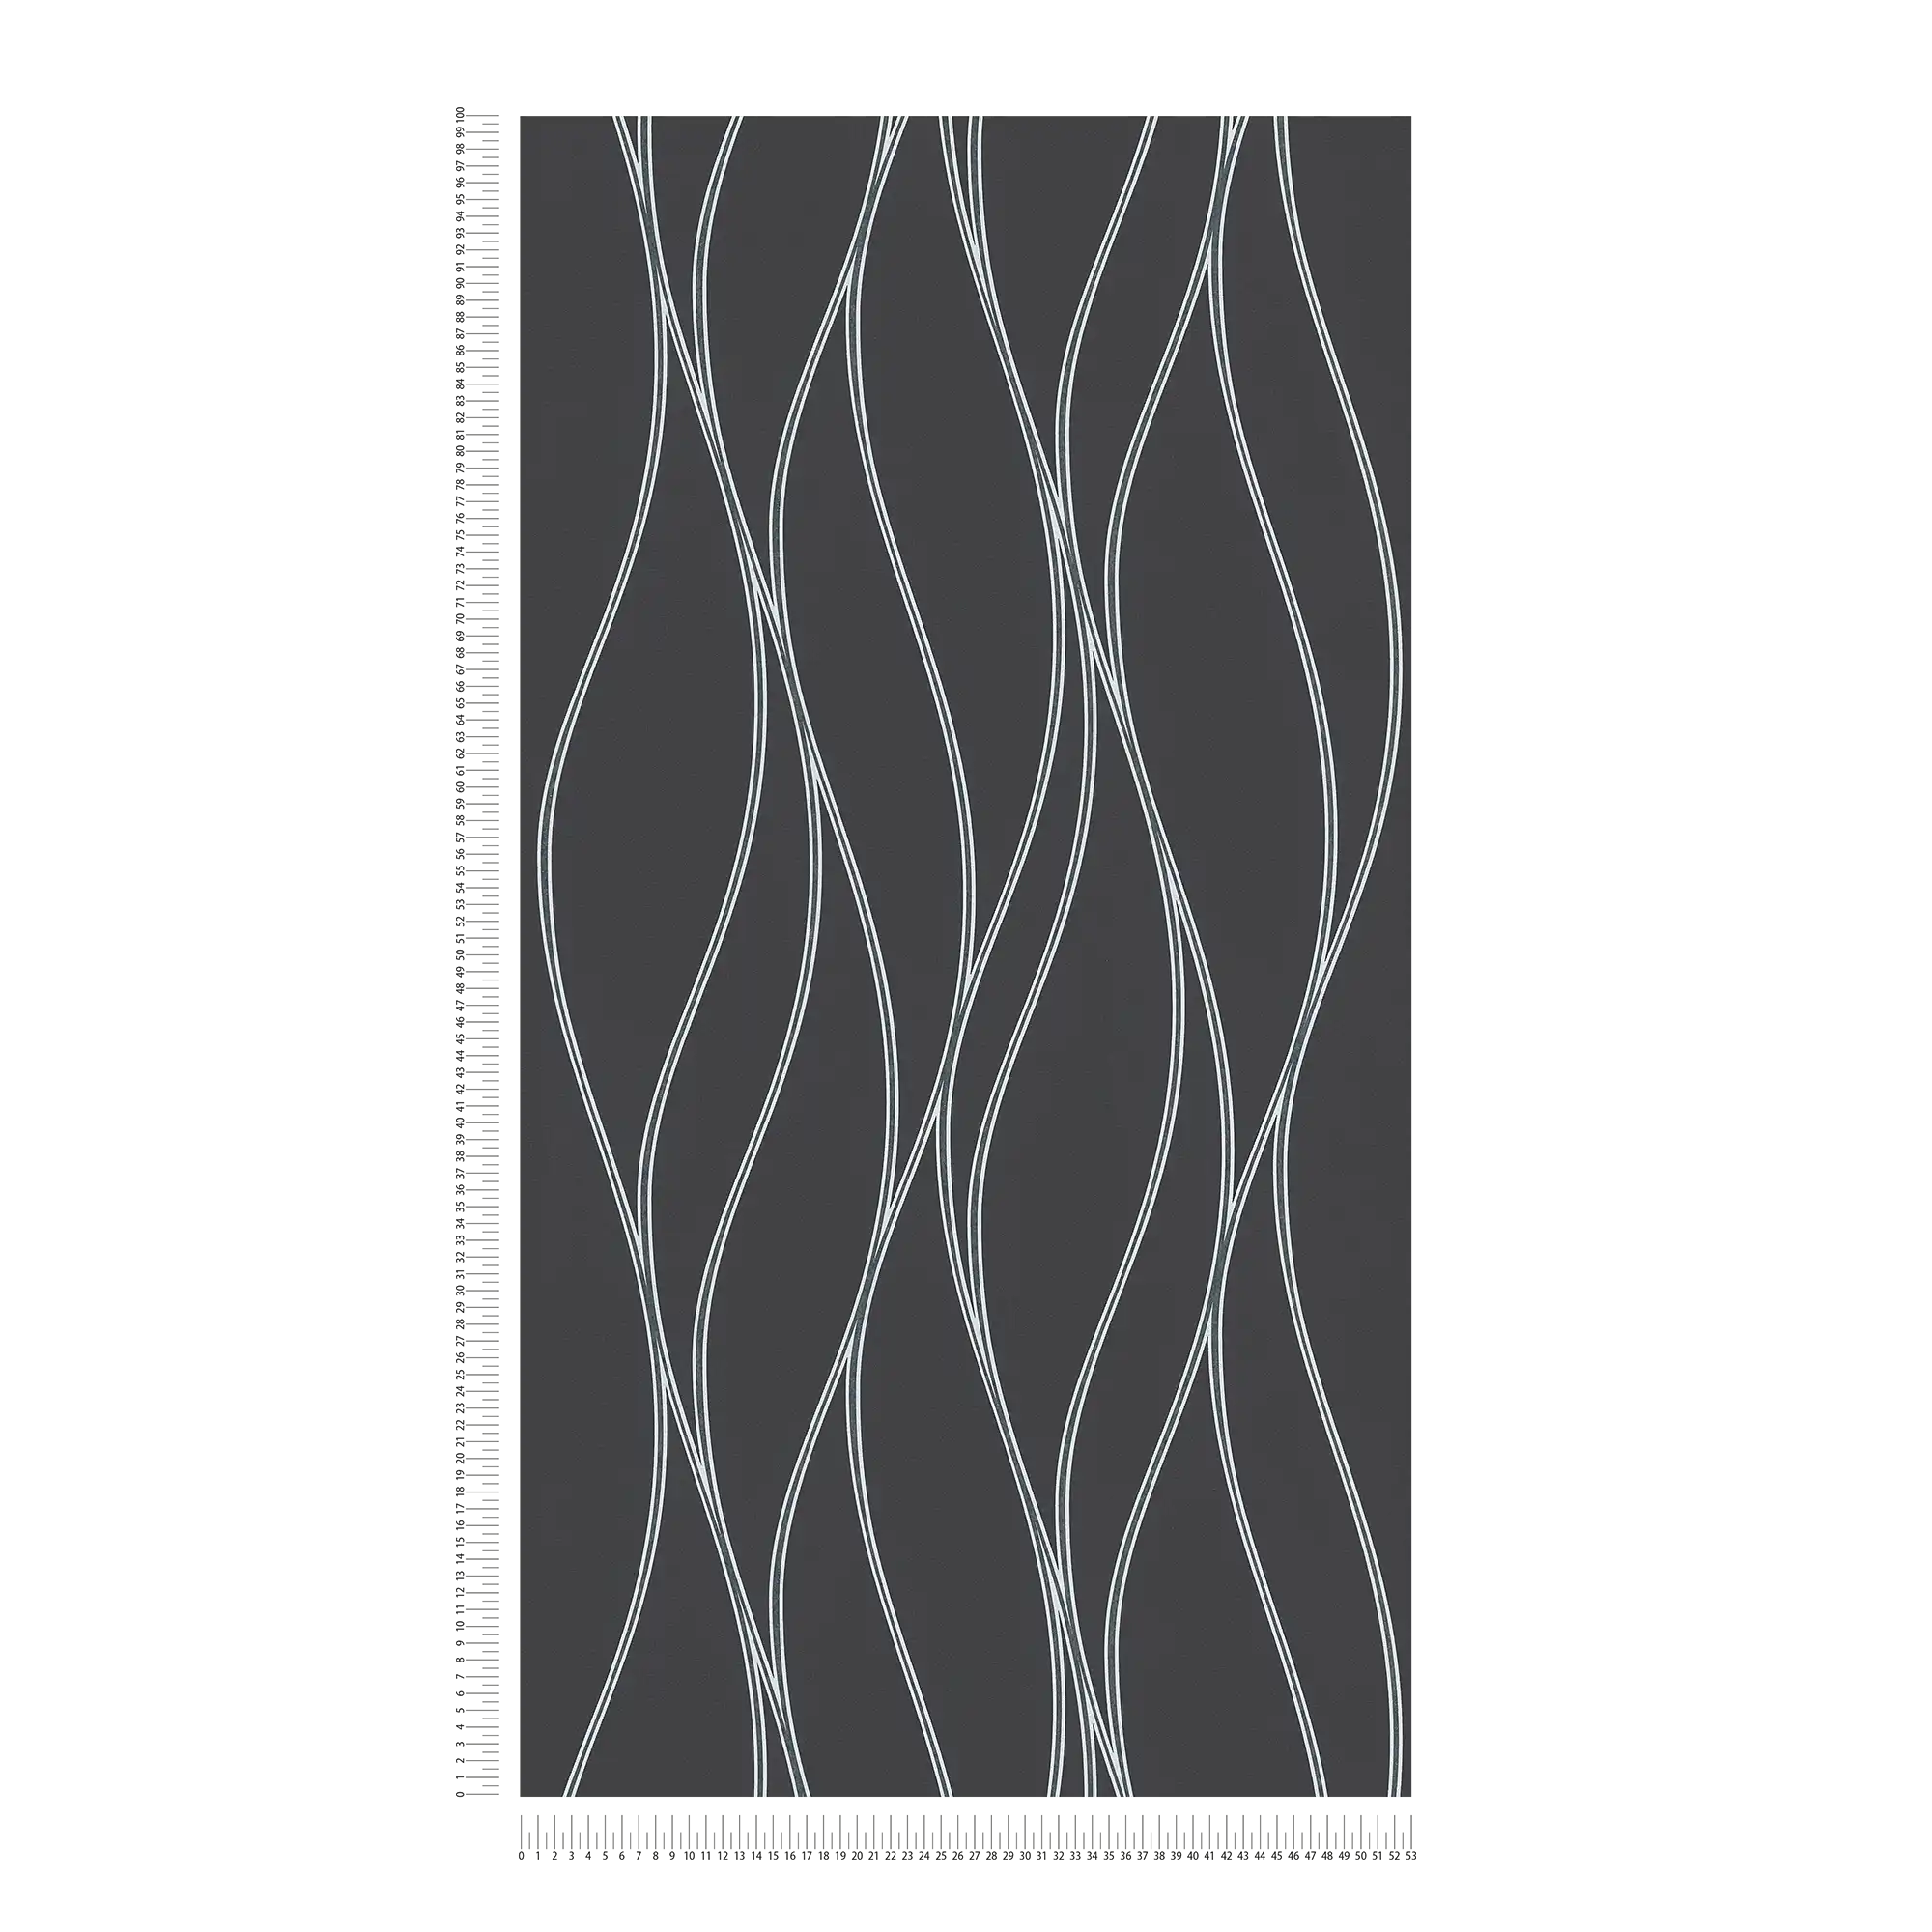             Tapete Wellen-Linien vertikal, Metallic-Effekt – Schwarz, Silber, Grau
        